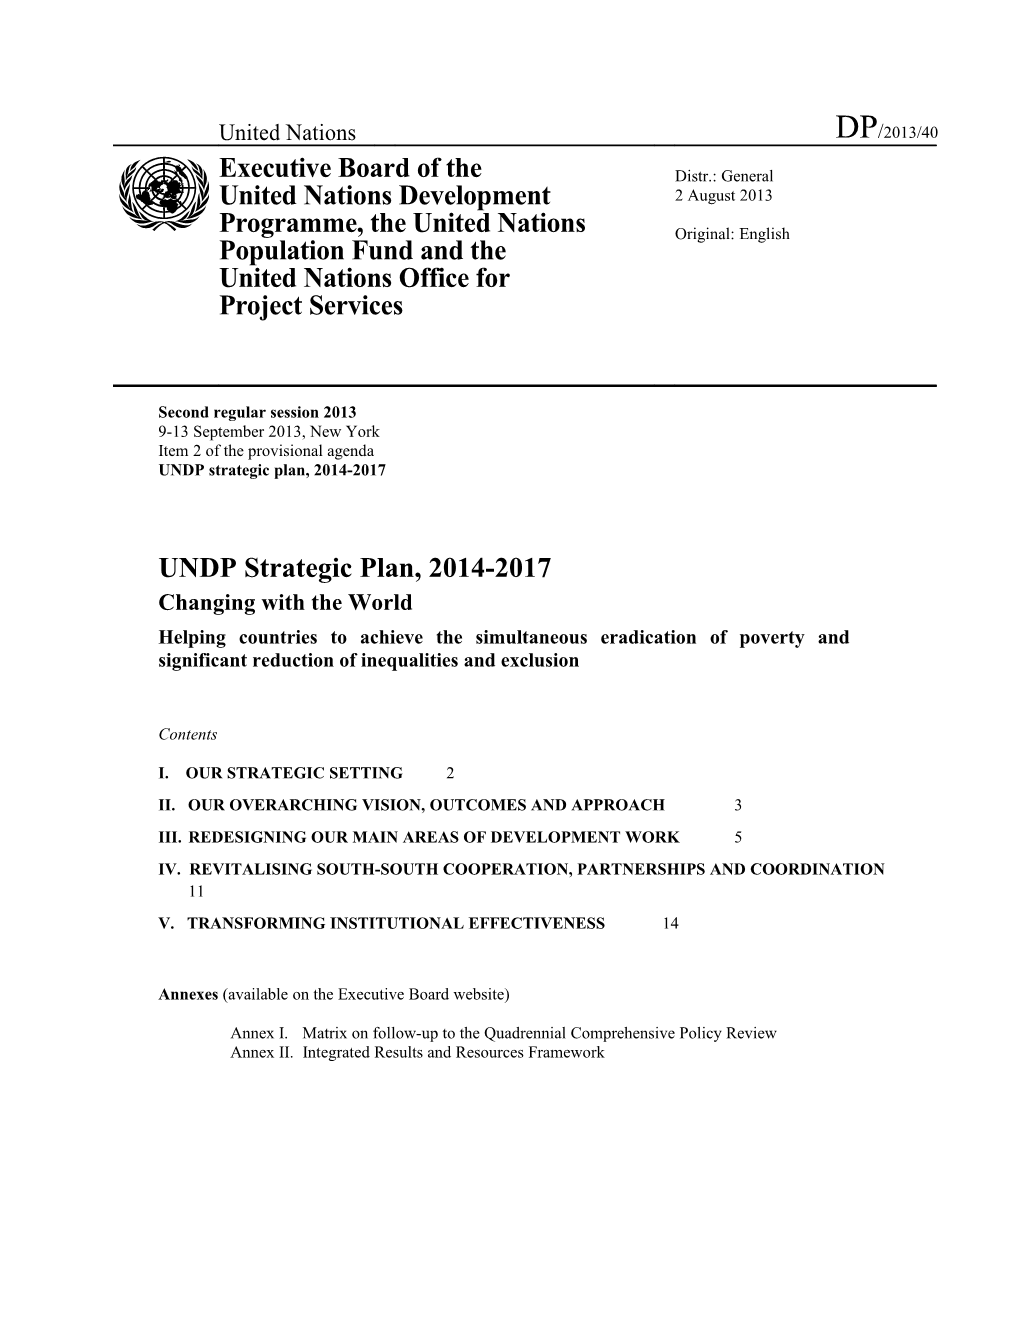 UNDP Strategic Plan, 2014-2017